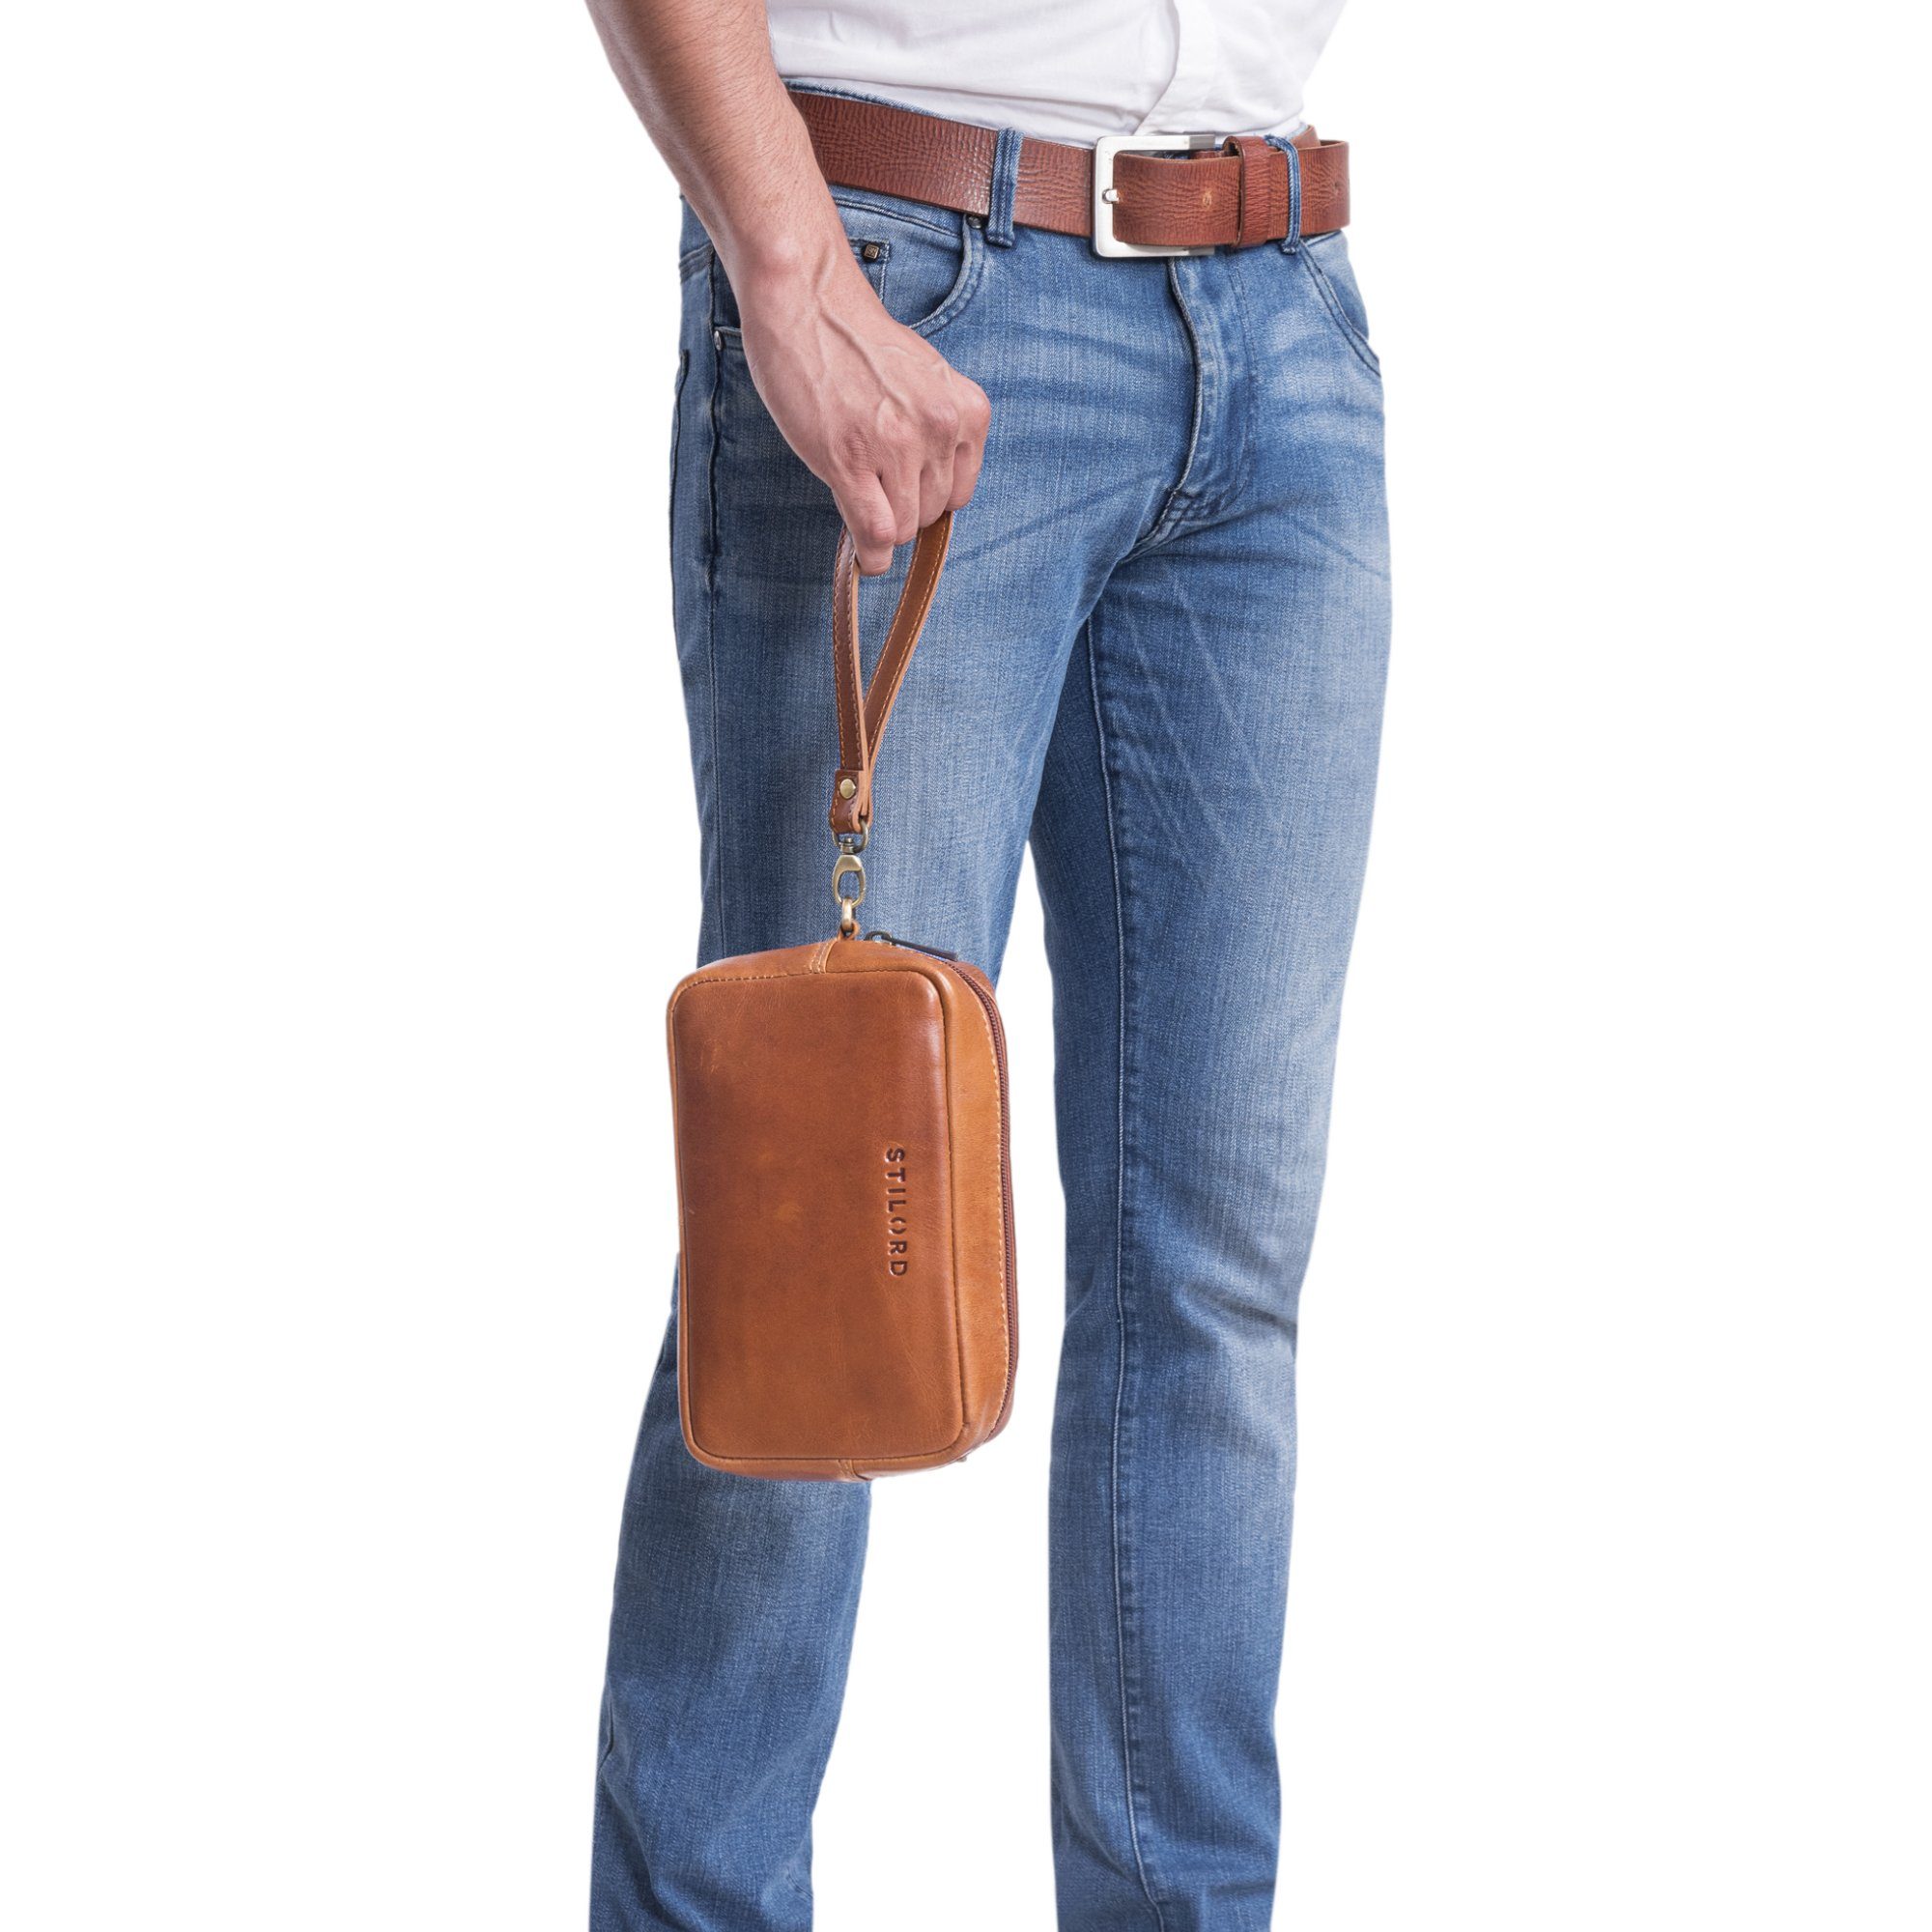 STILORD Messenger Bag "Larkin" Herren geschmeidigem dunkelbraun Leder aus - mocca Handgelenktasche